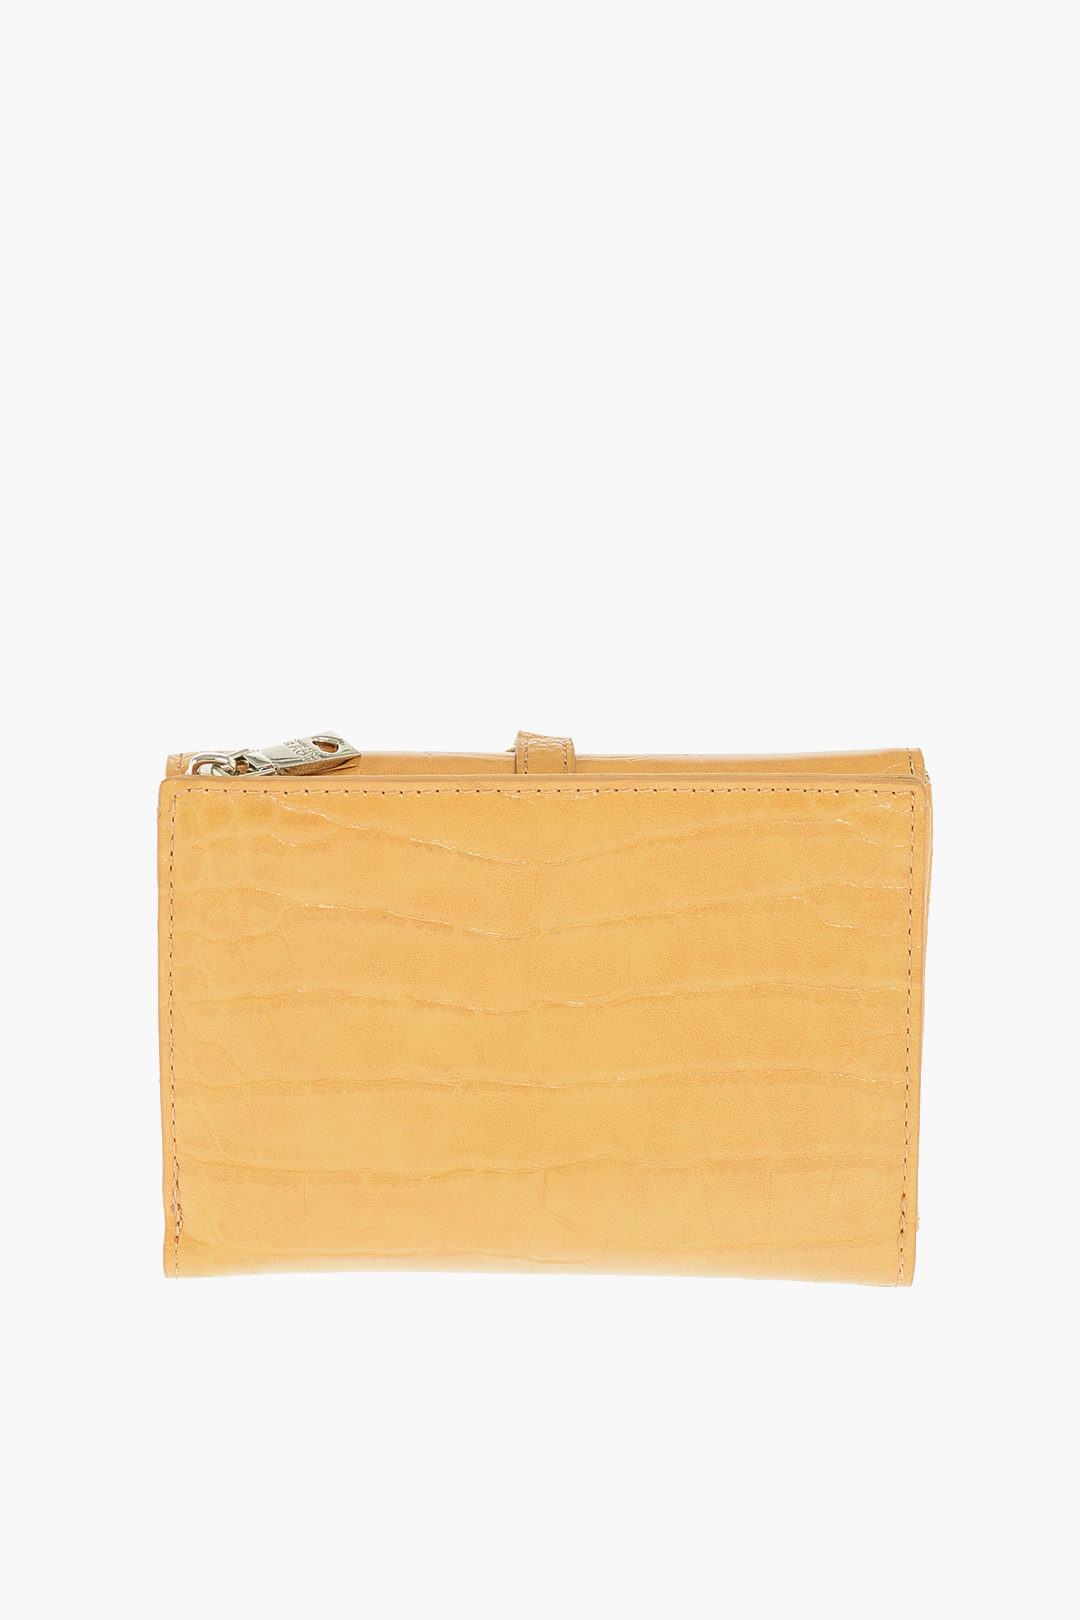 Celine front printed textured leather wallet men - Glamood Outlet